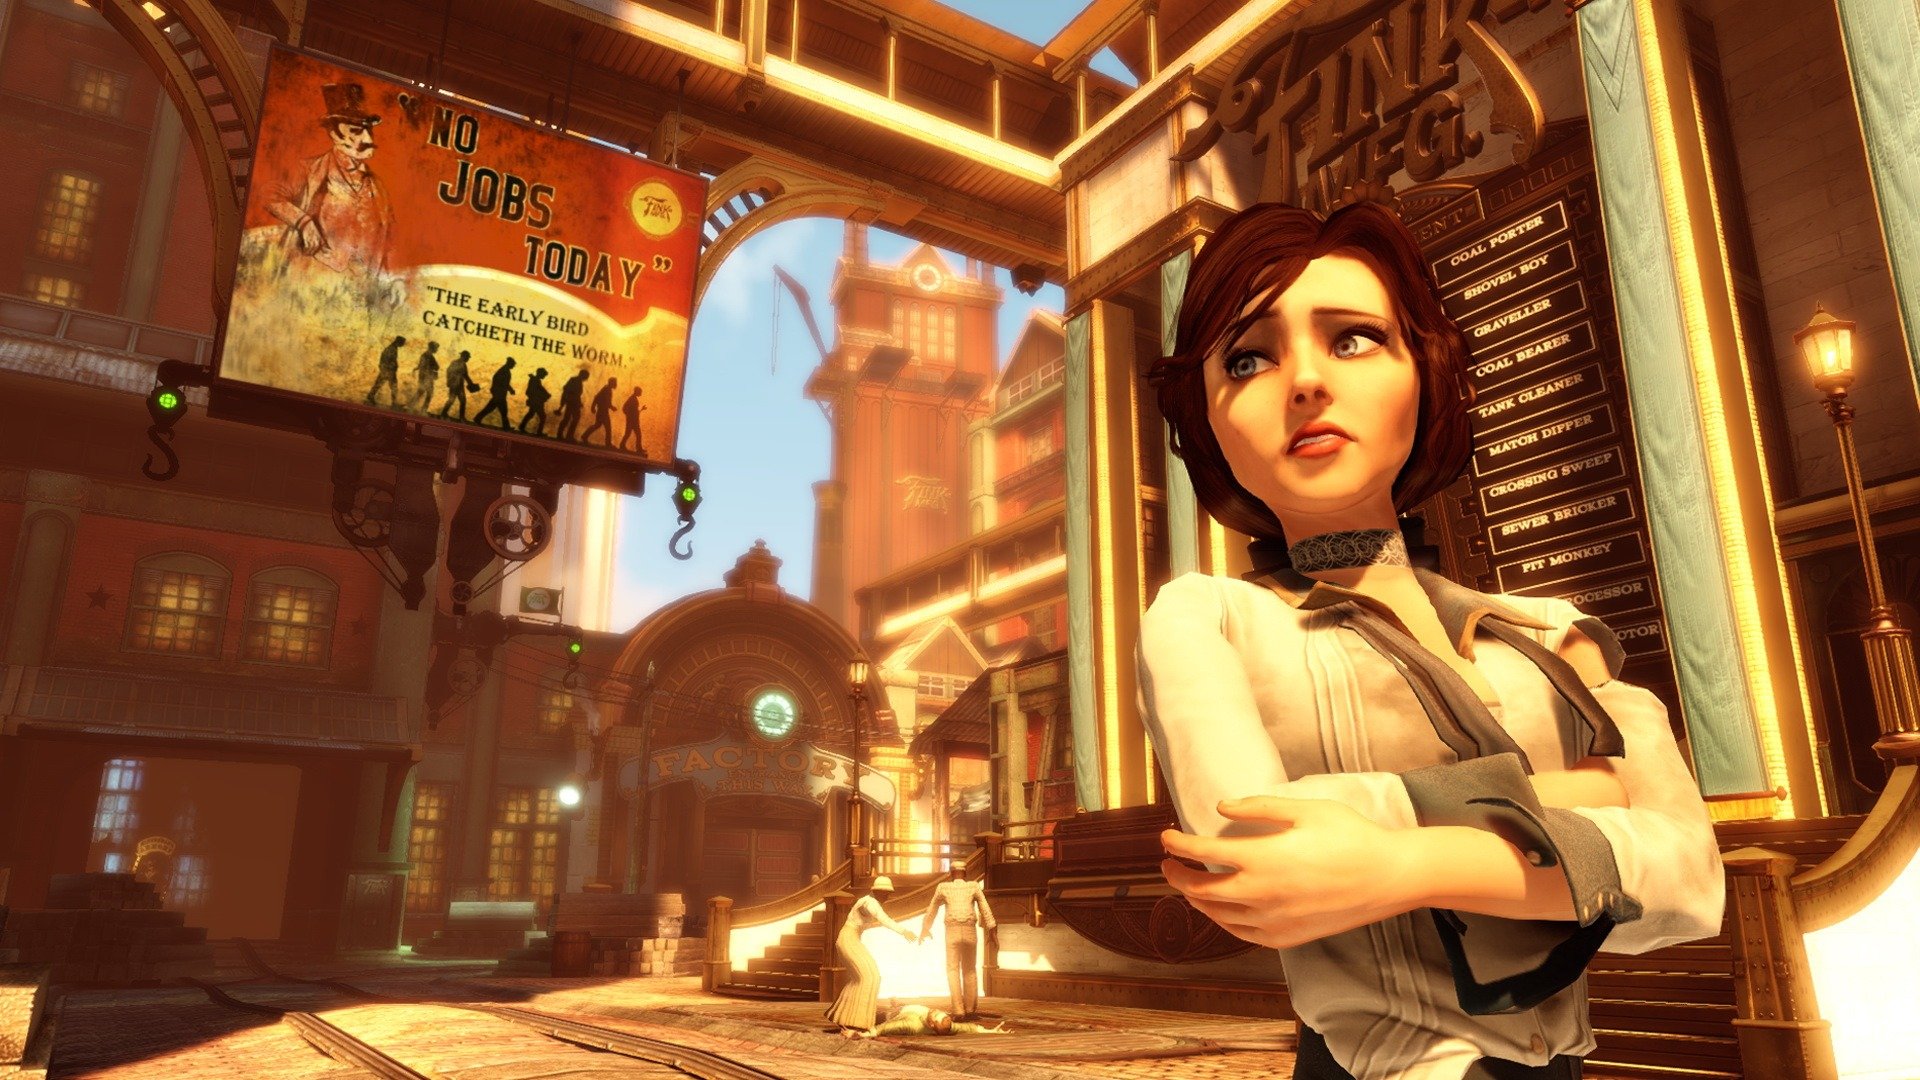 Report: BioShock director's new game facing troubled development, The Gamers Dreams, thegamersdreams.com